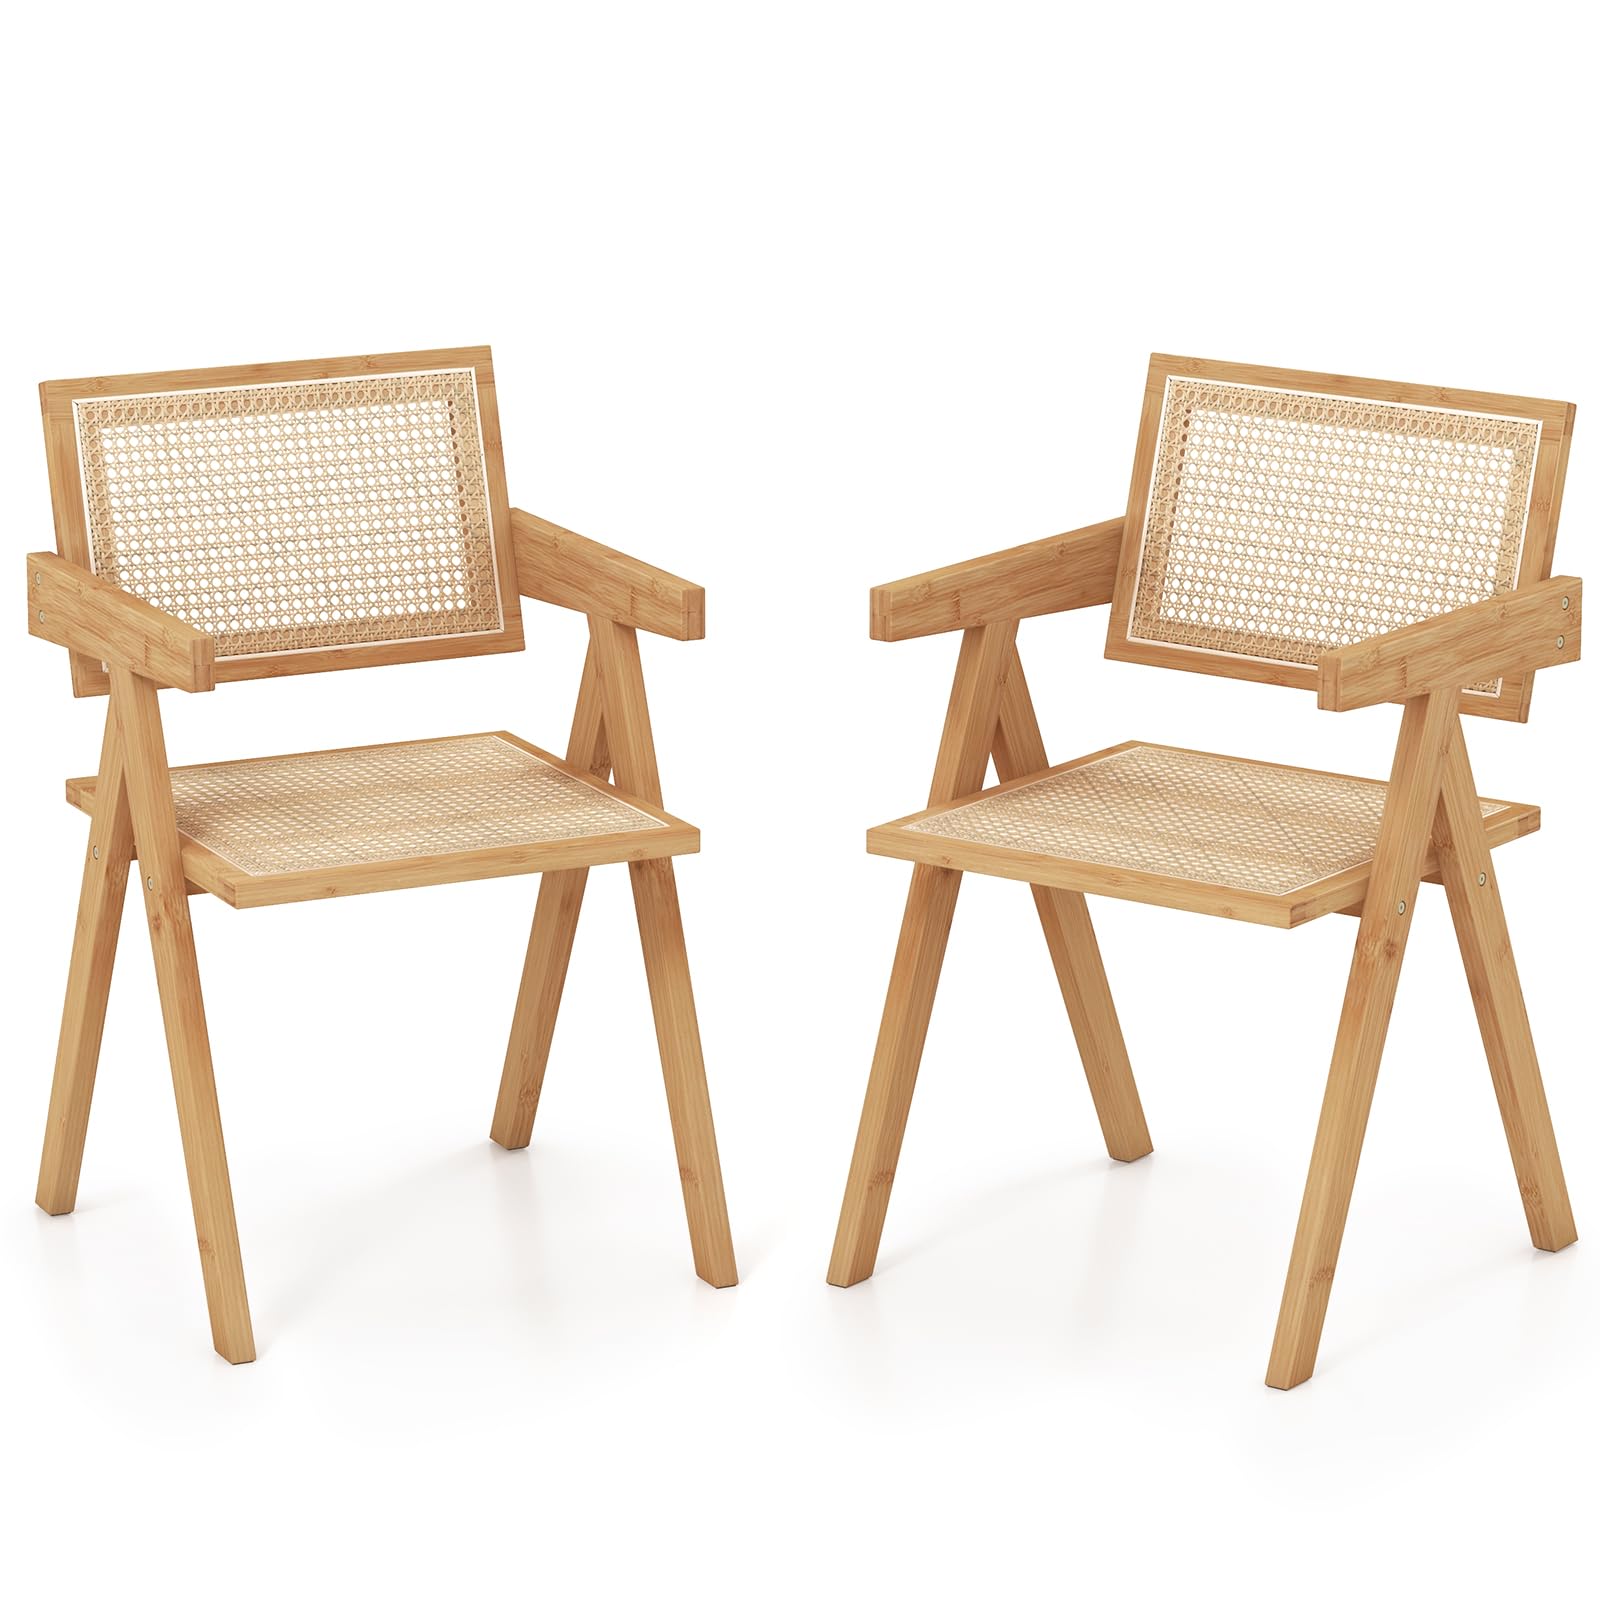 Giantex Rattan Accent Chair Set of 2